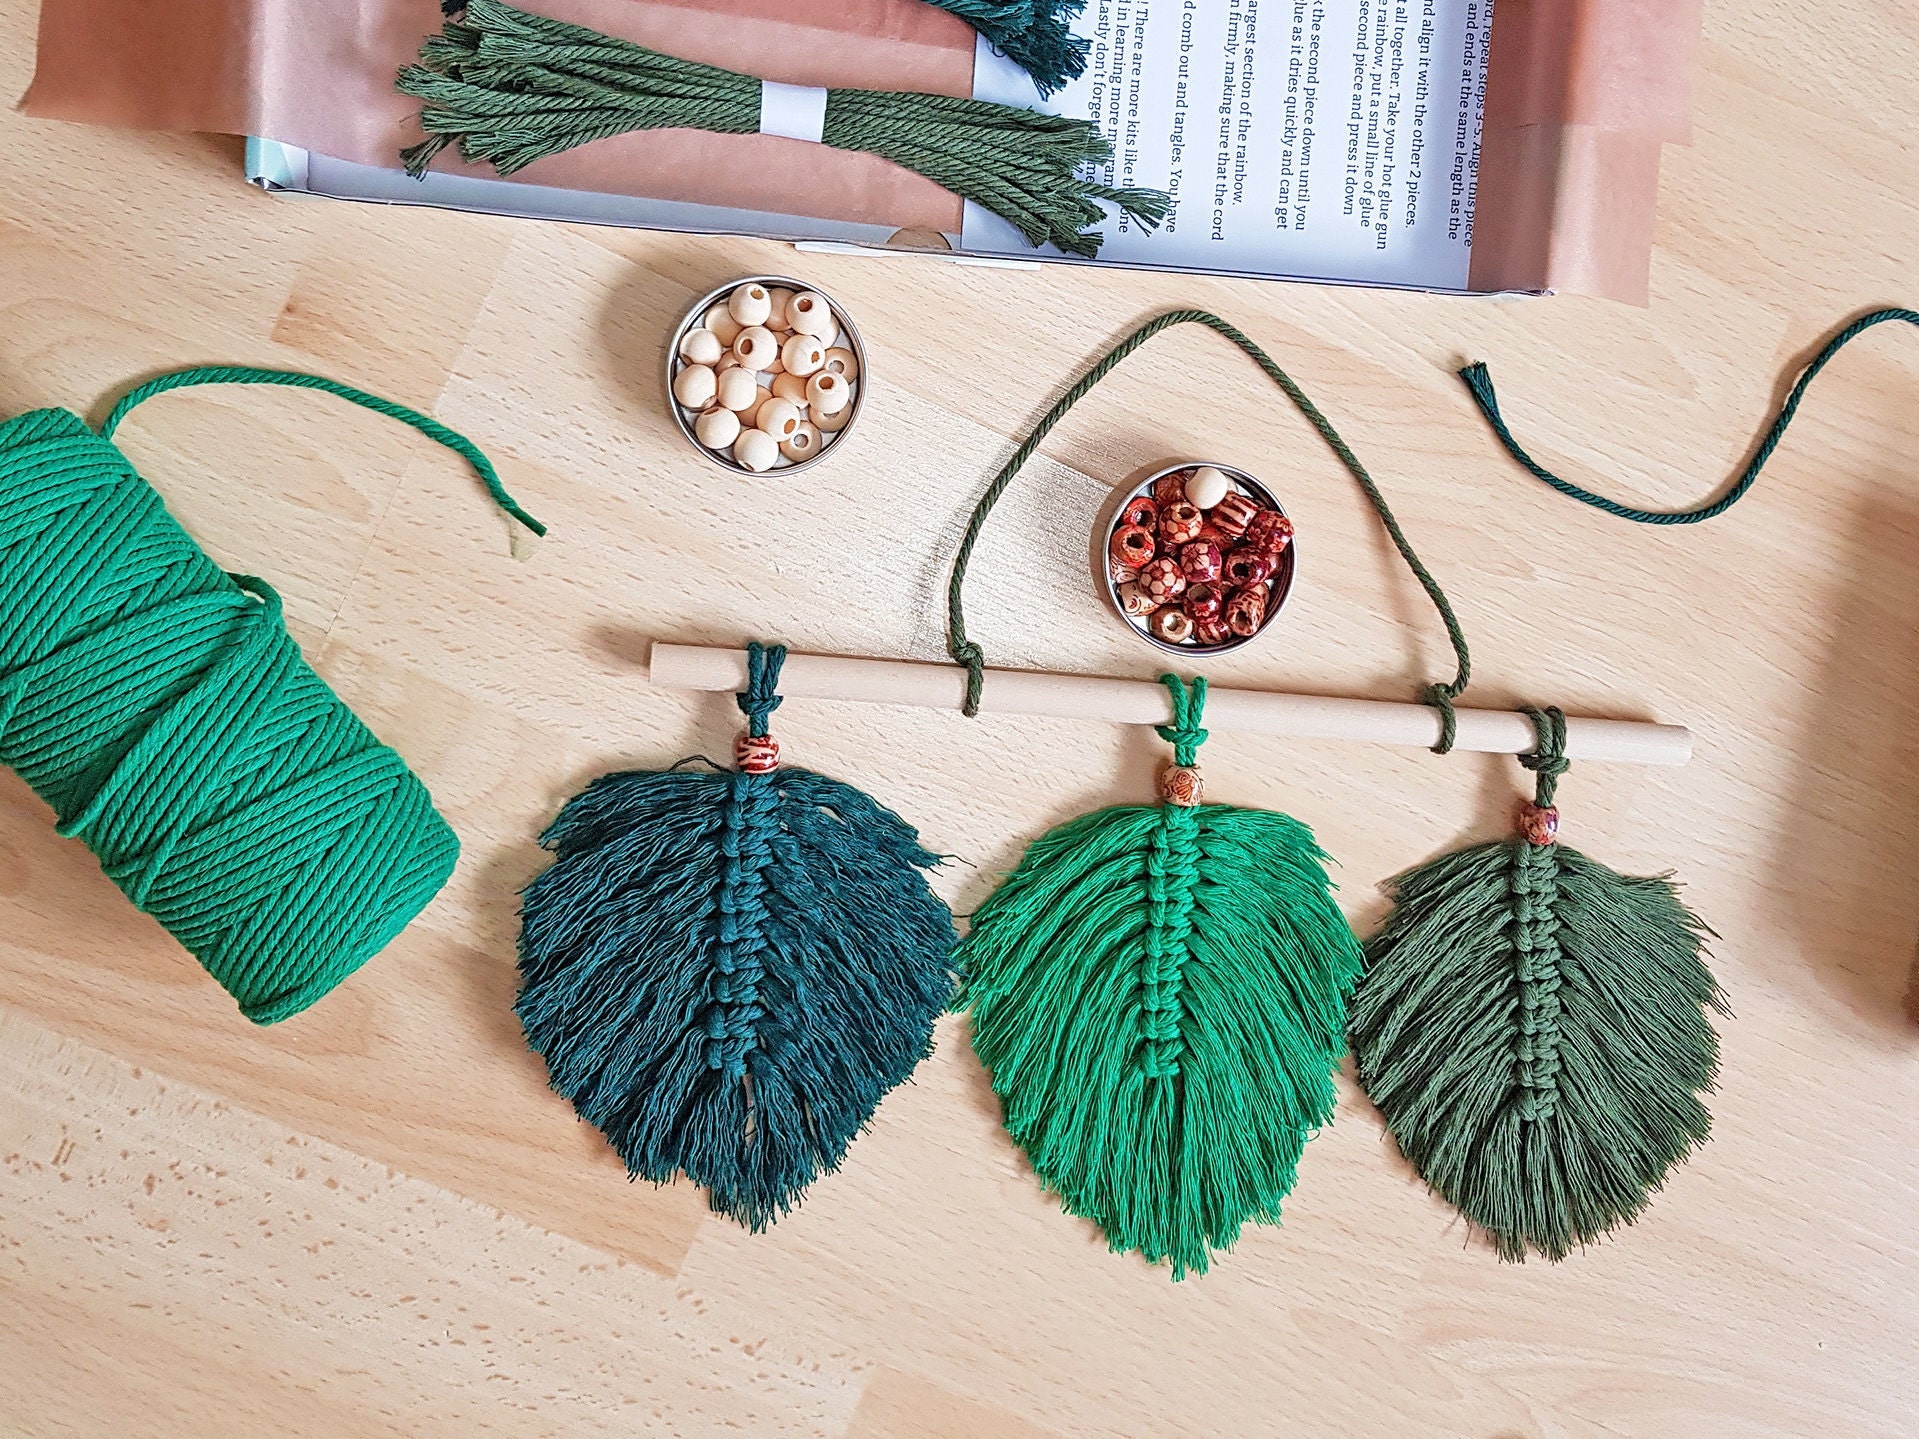 DIY Autumn Leaf Macrame Wall Hanging Kit Video Tutorial Make Your